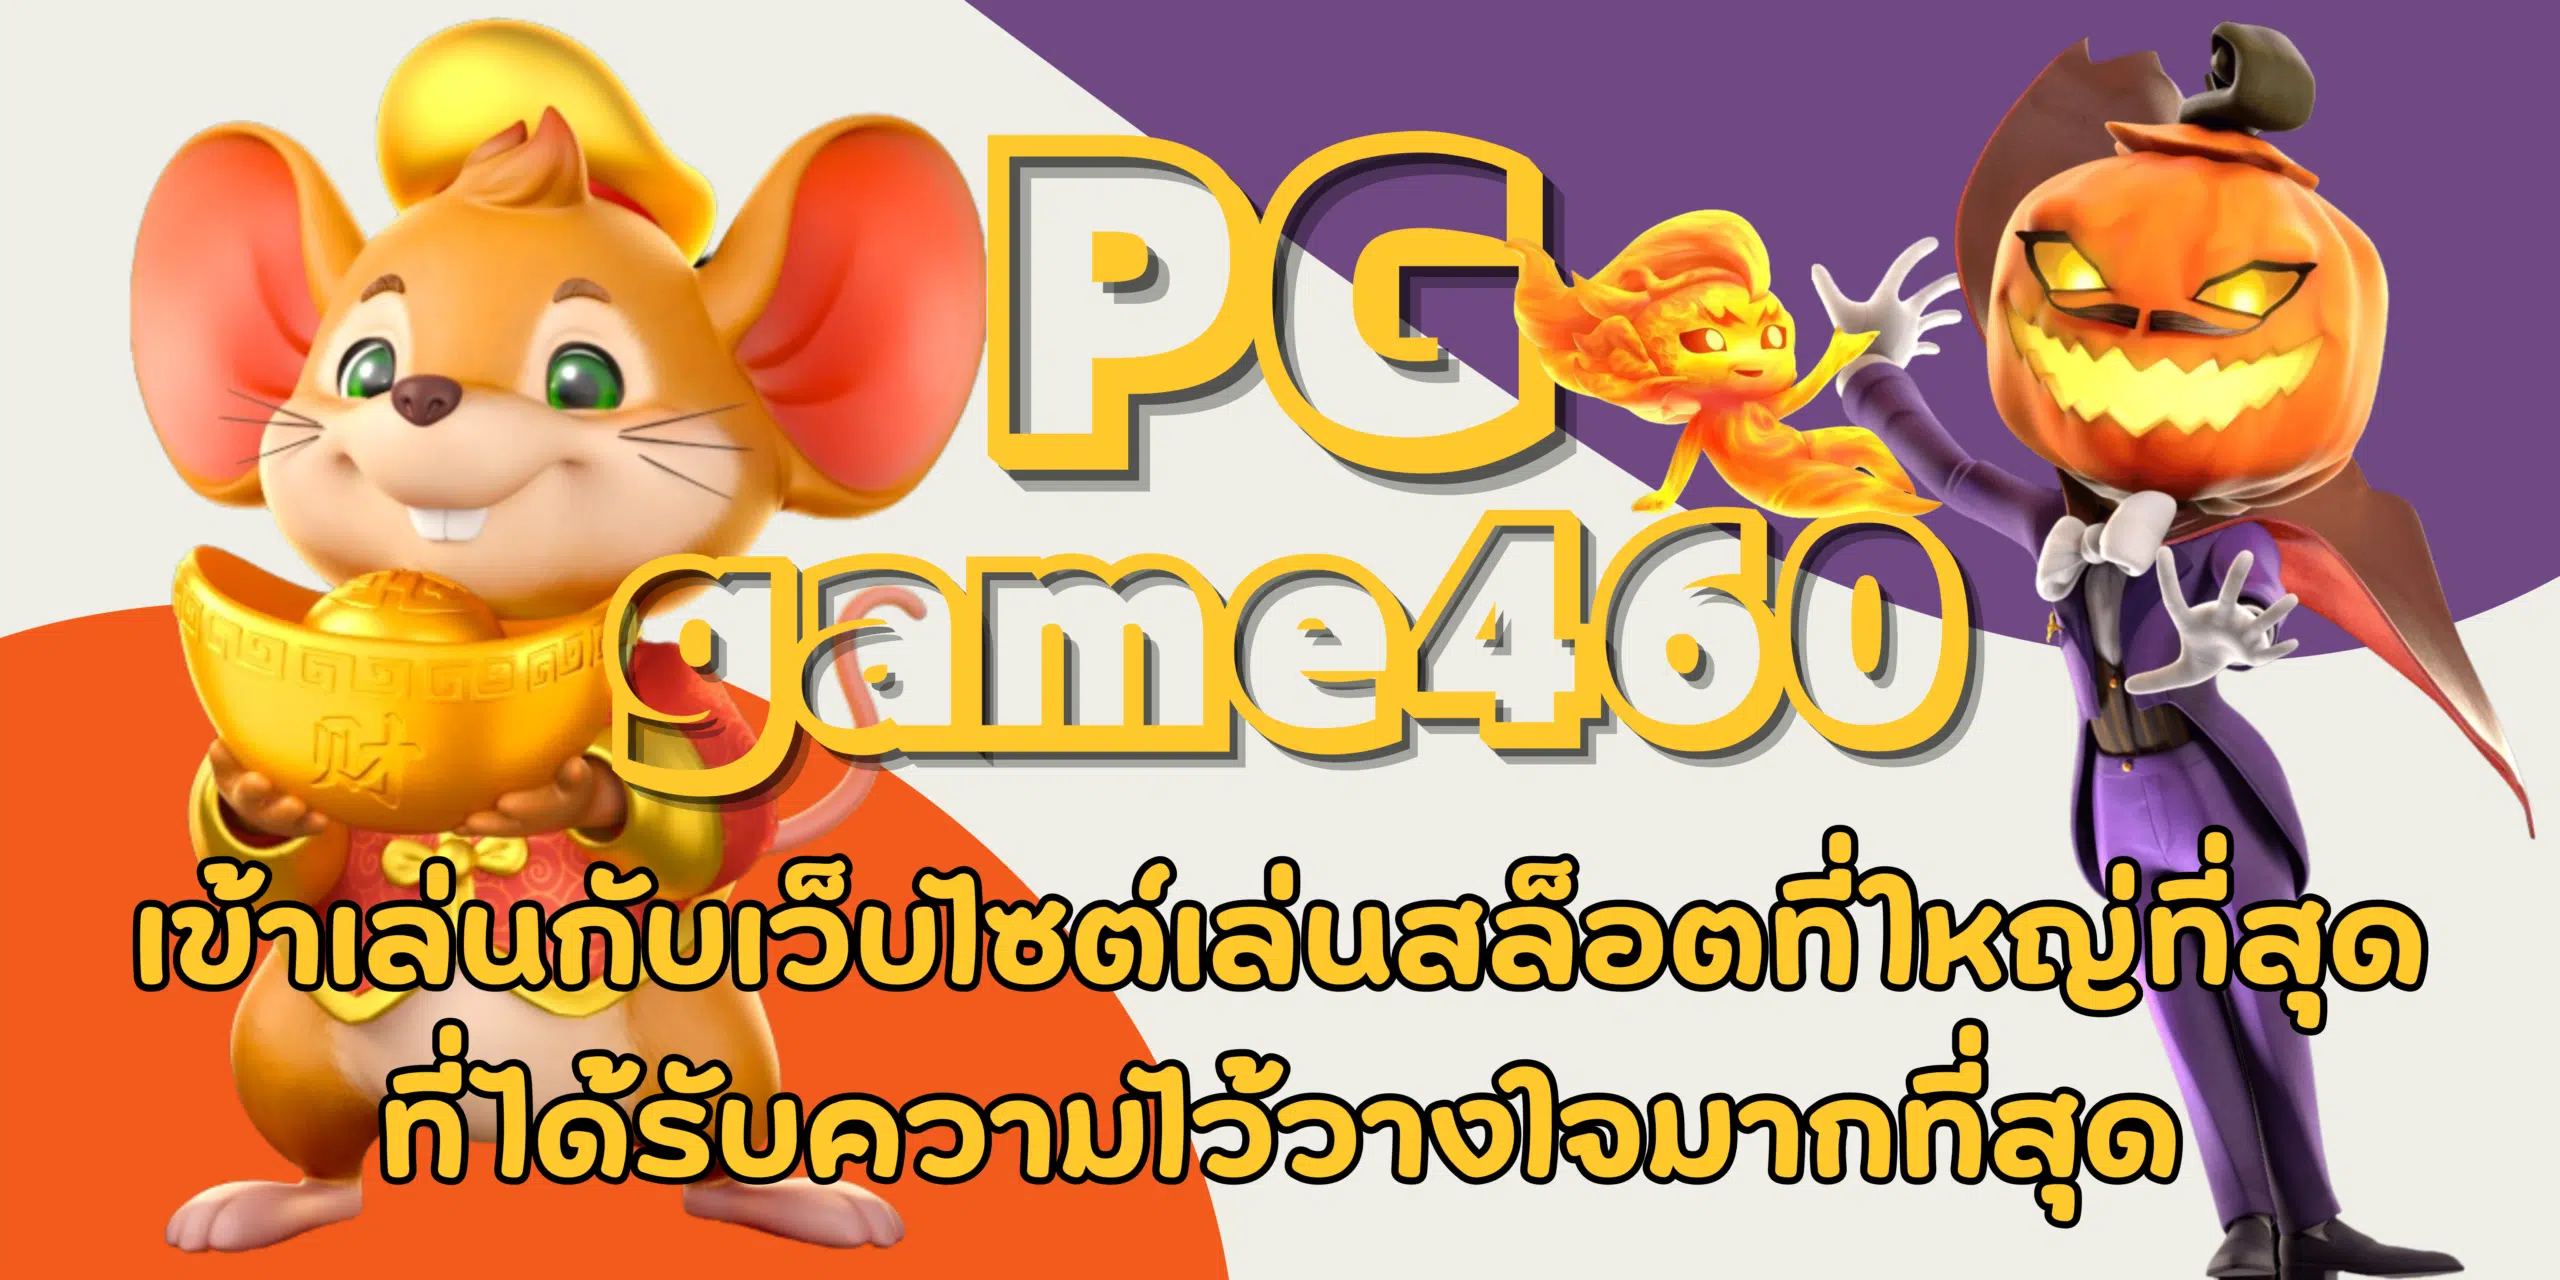 PG-game460-สมัครสมาชิก